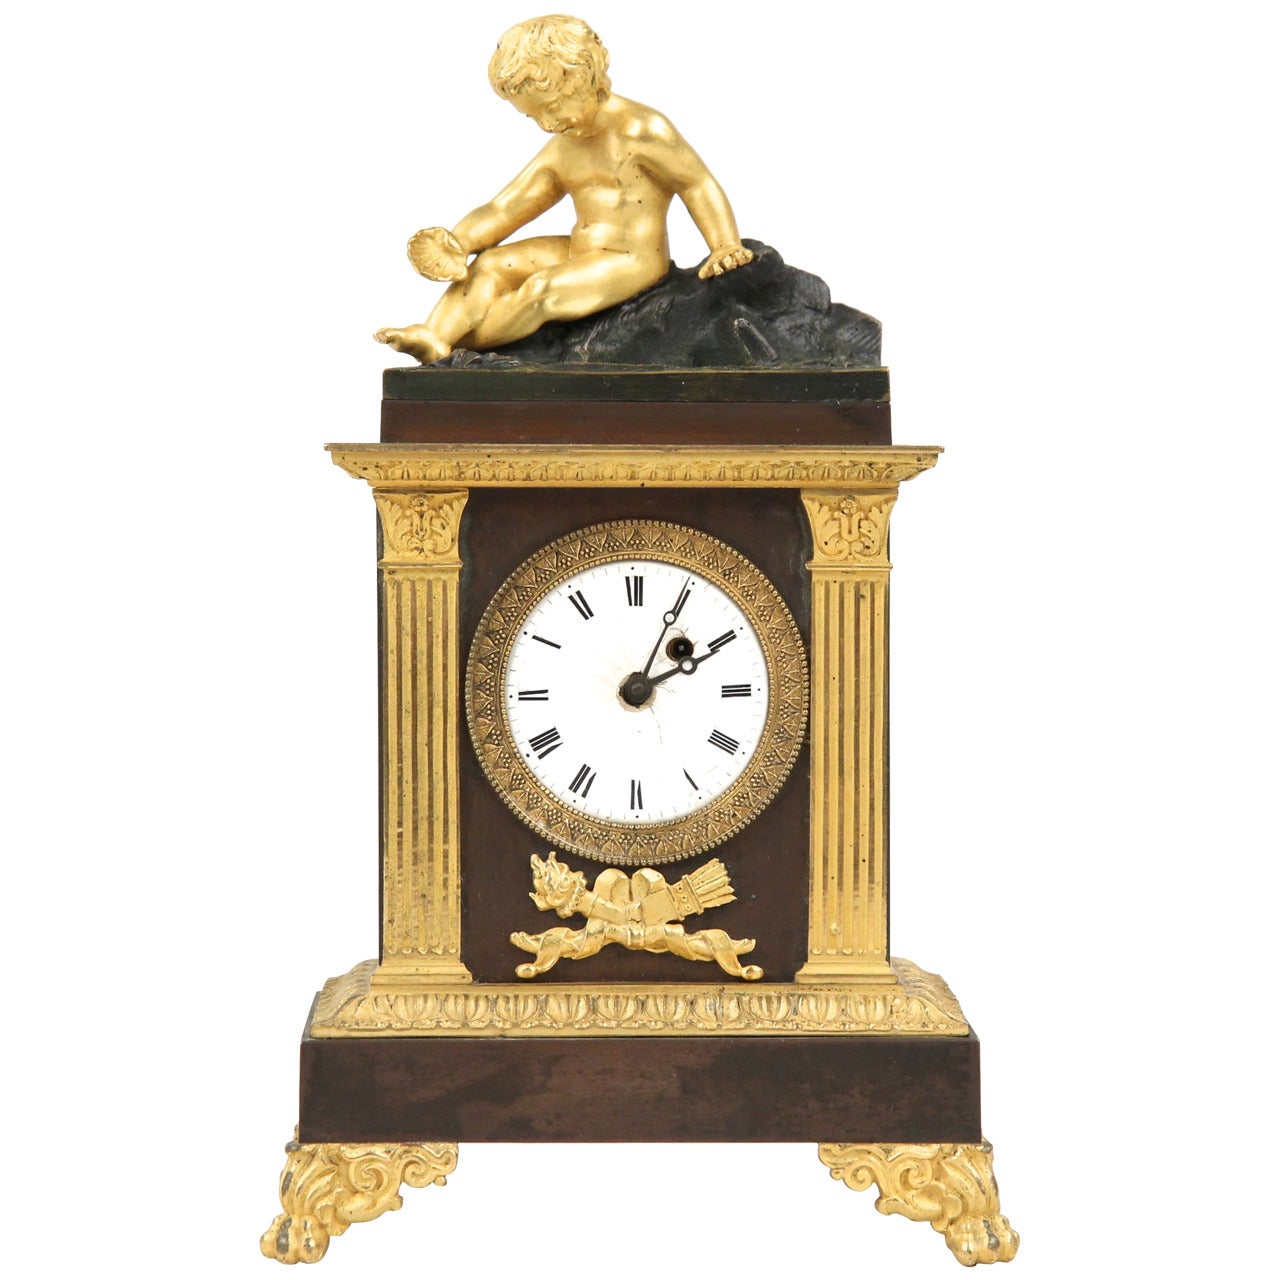 19th Century French Empire Antique Bronze Mantel Clock by Caranda, Paris